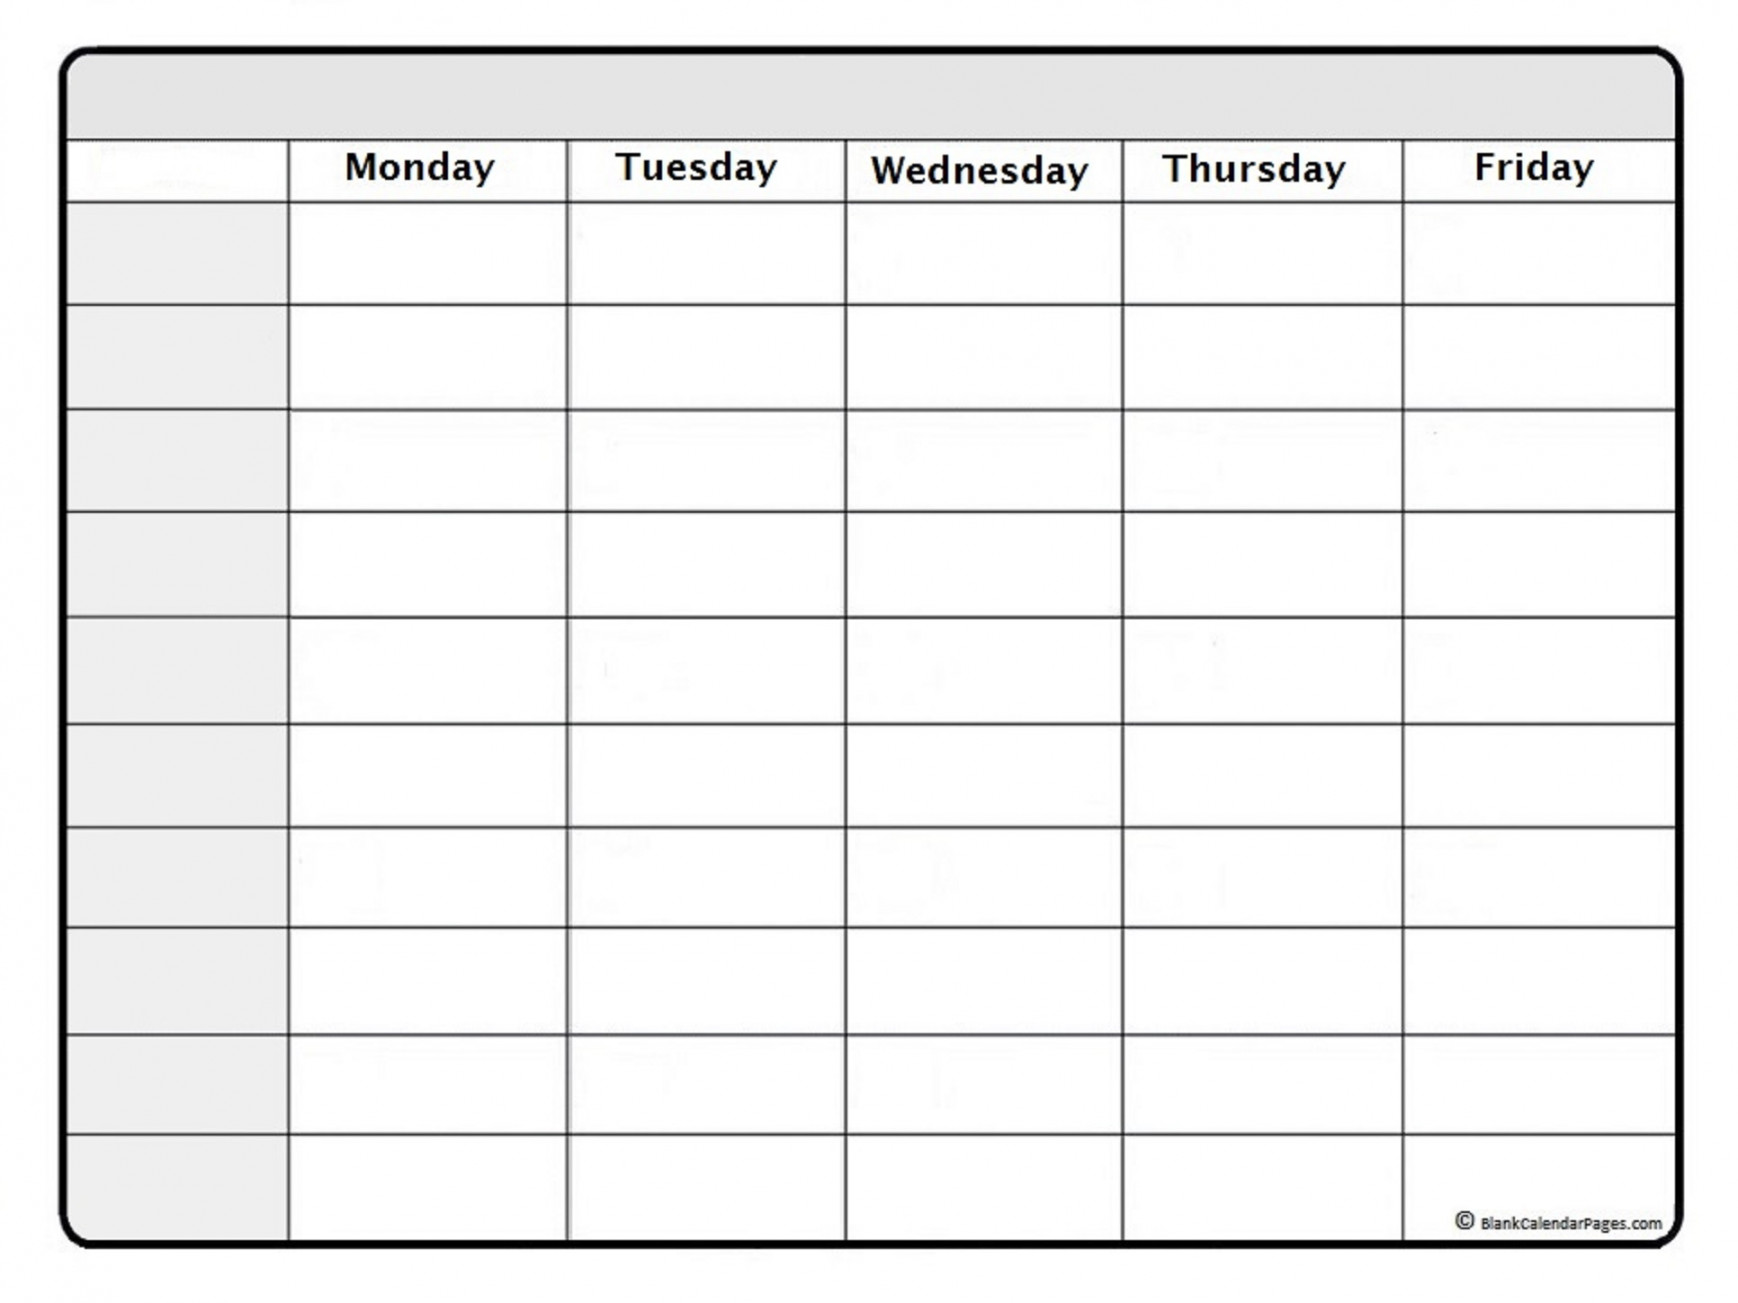 December  weekly calendar  December  weekly calendar template